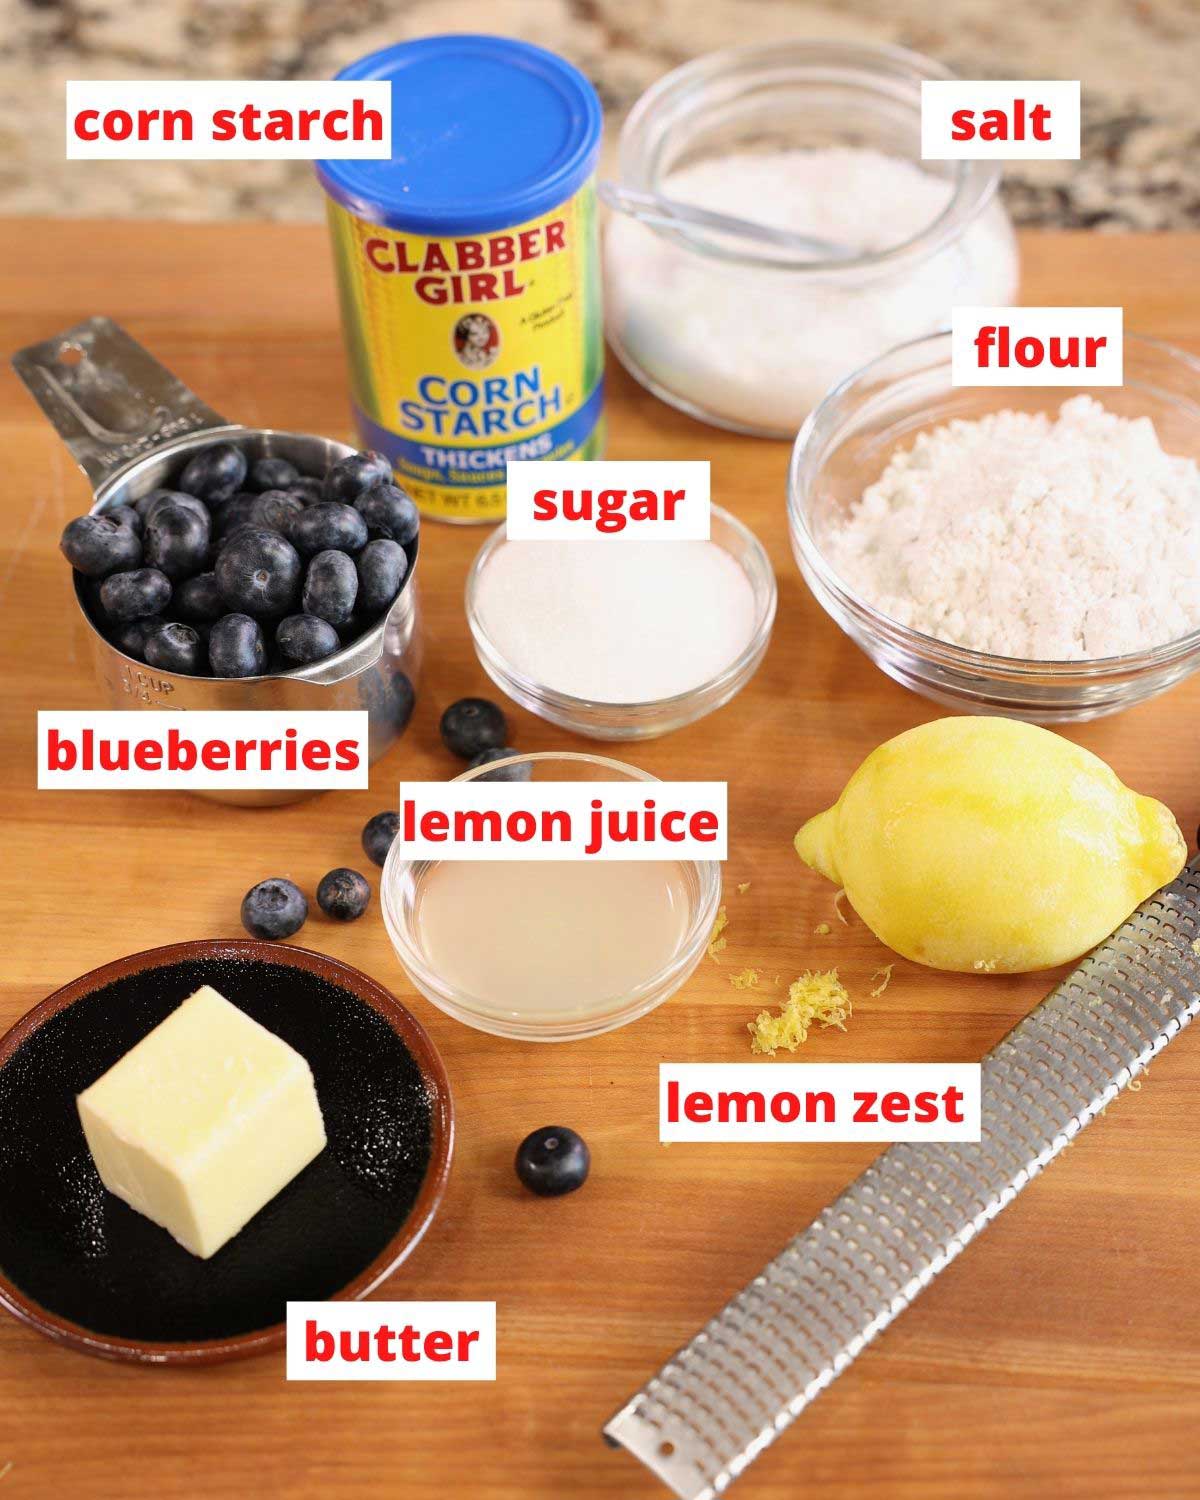 butter, blueberries, lemons, flour, and cornstarch on a wooden cutting board.